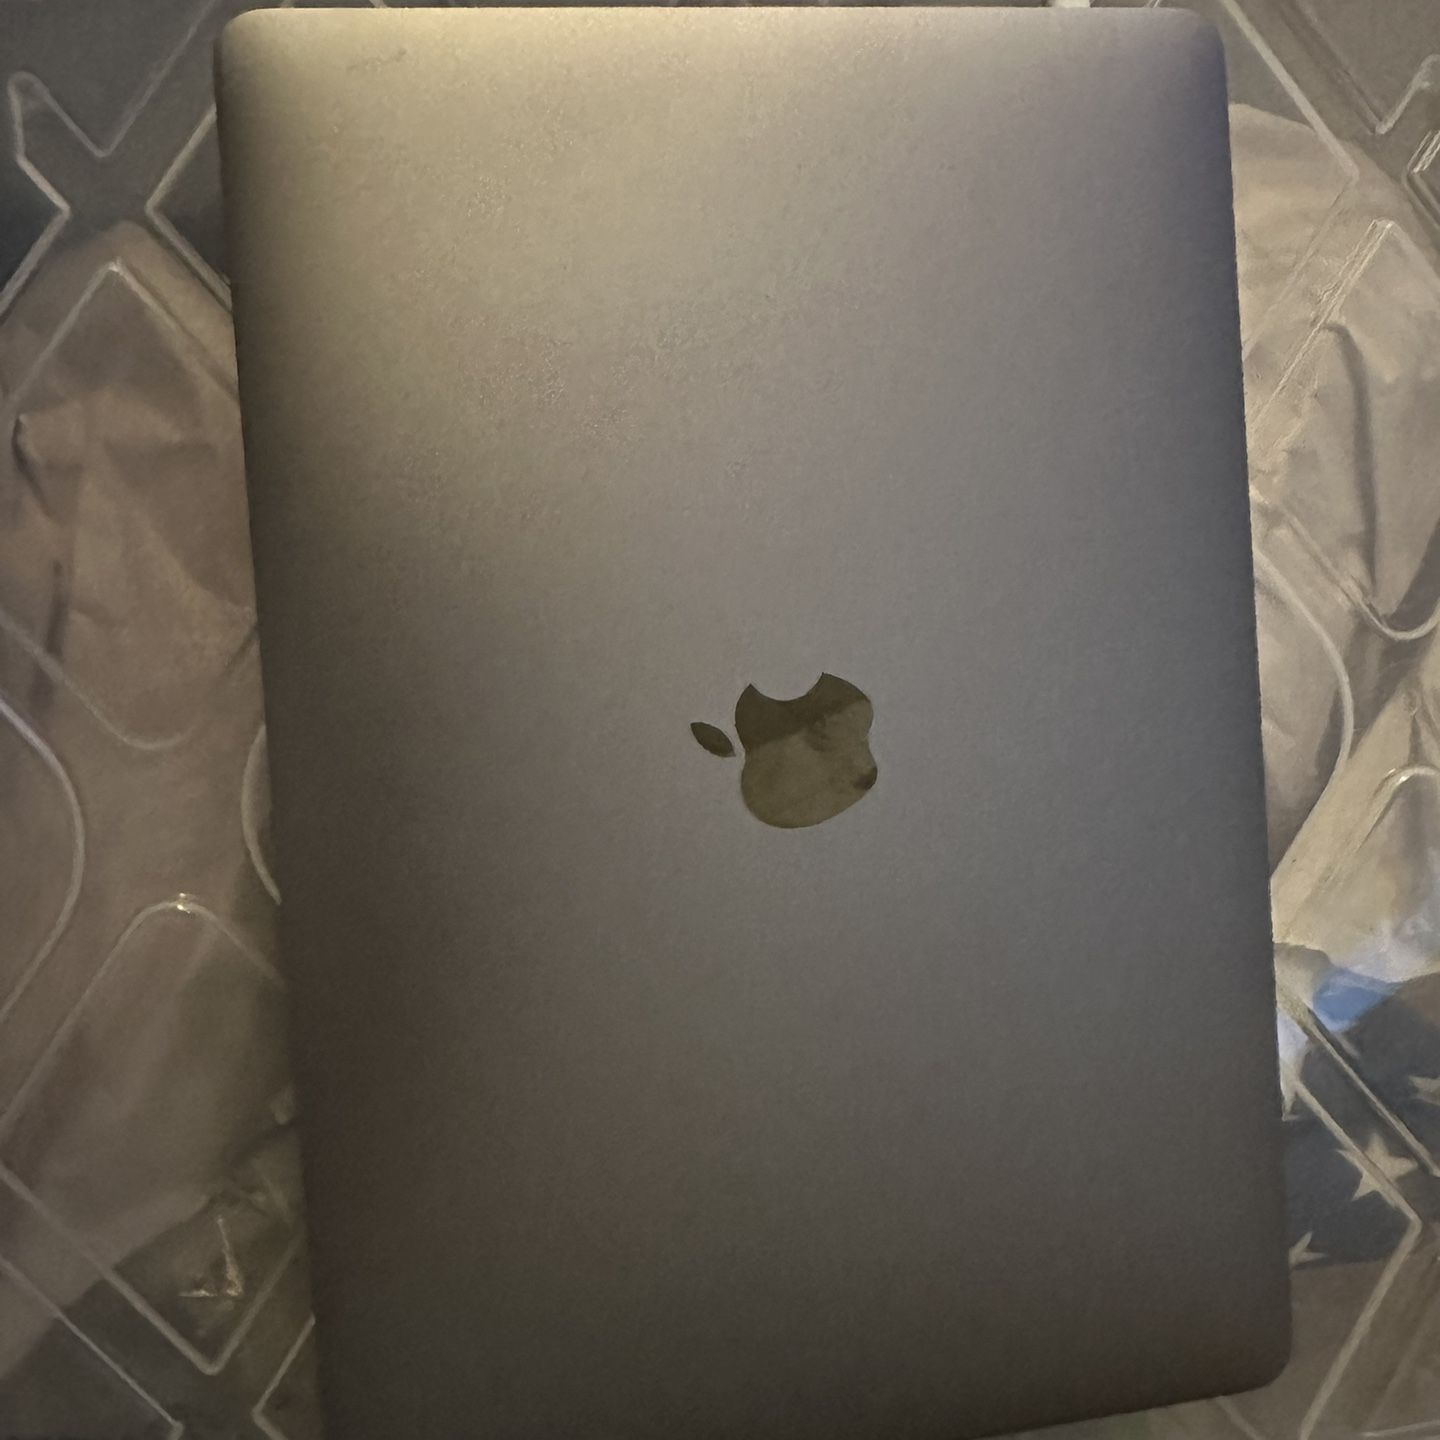 13 Inch MacBook Pro  1TB- $600